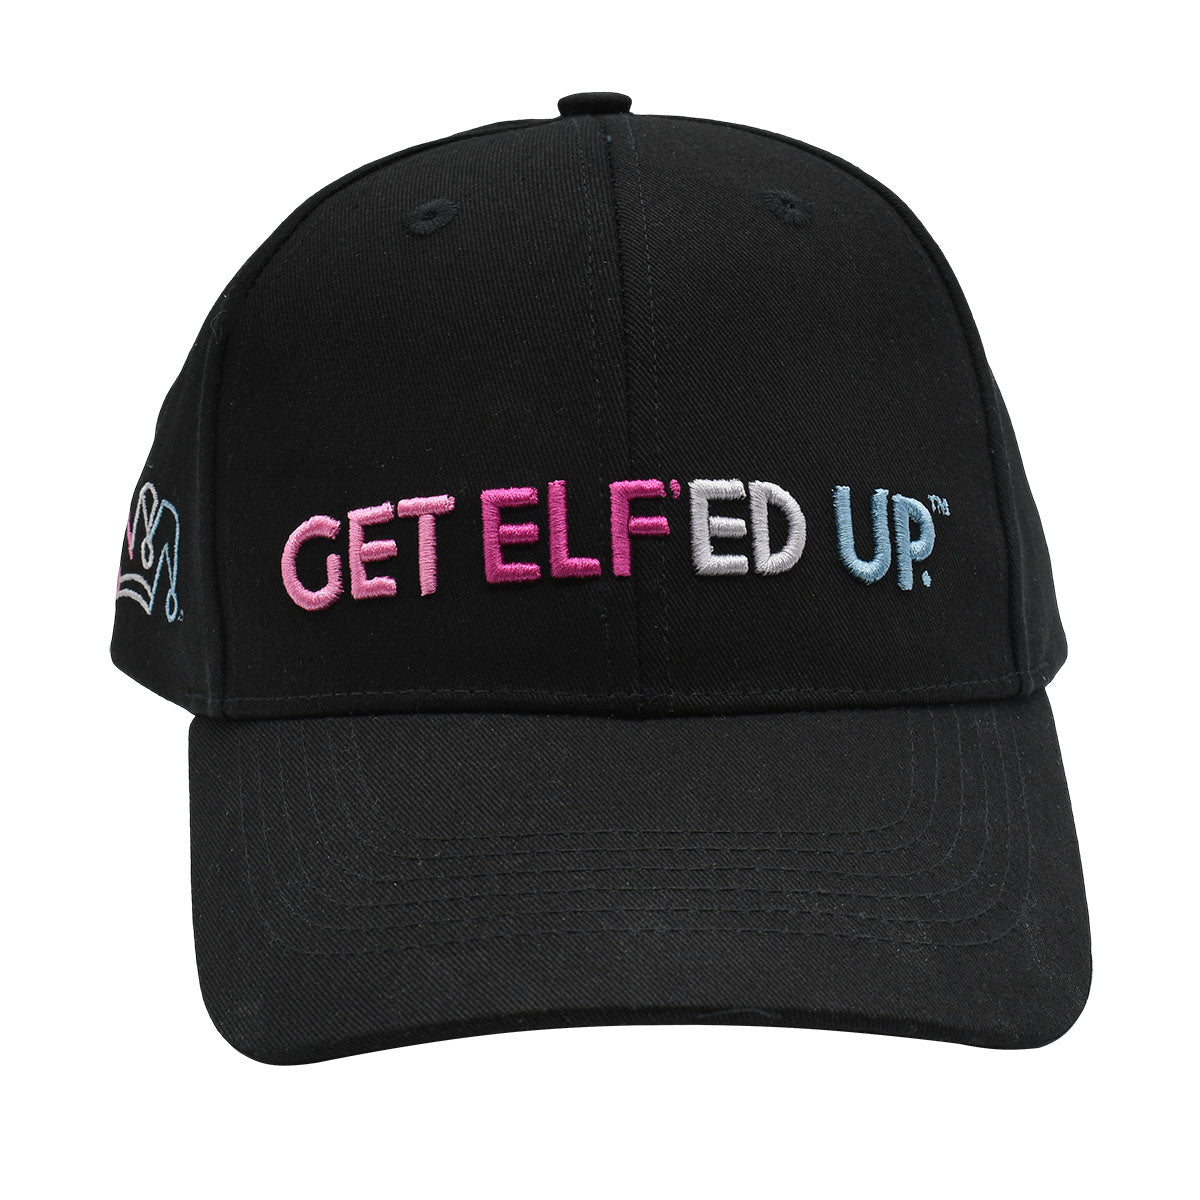 Get Elf'ed Up Curved Bill Cap